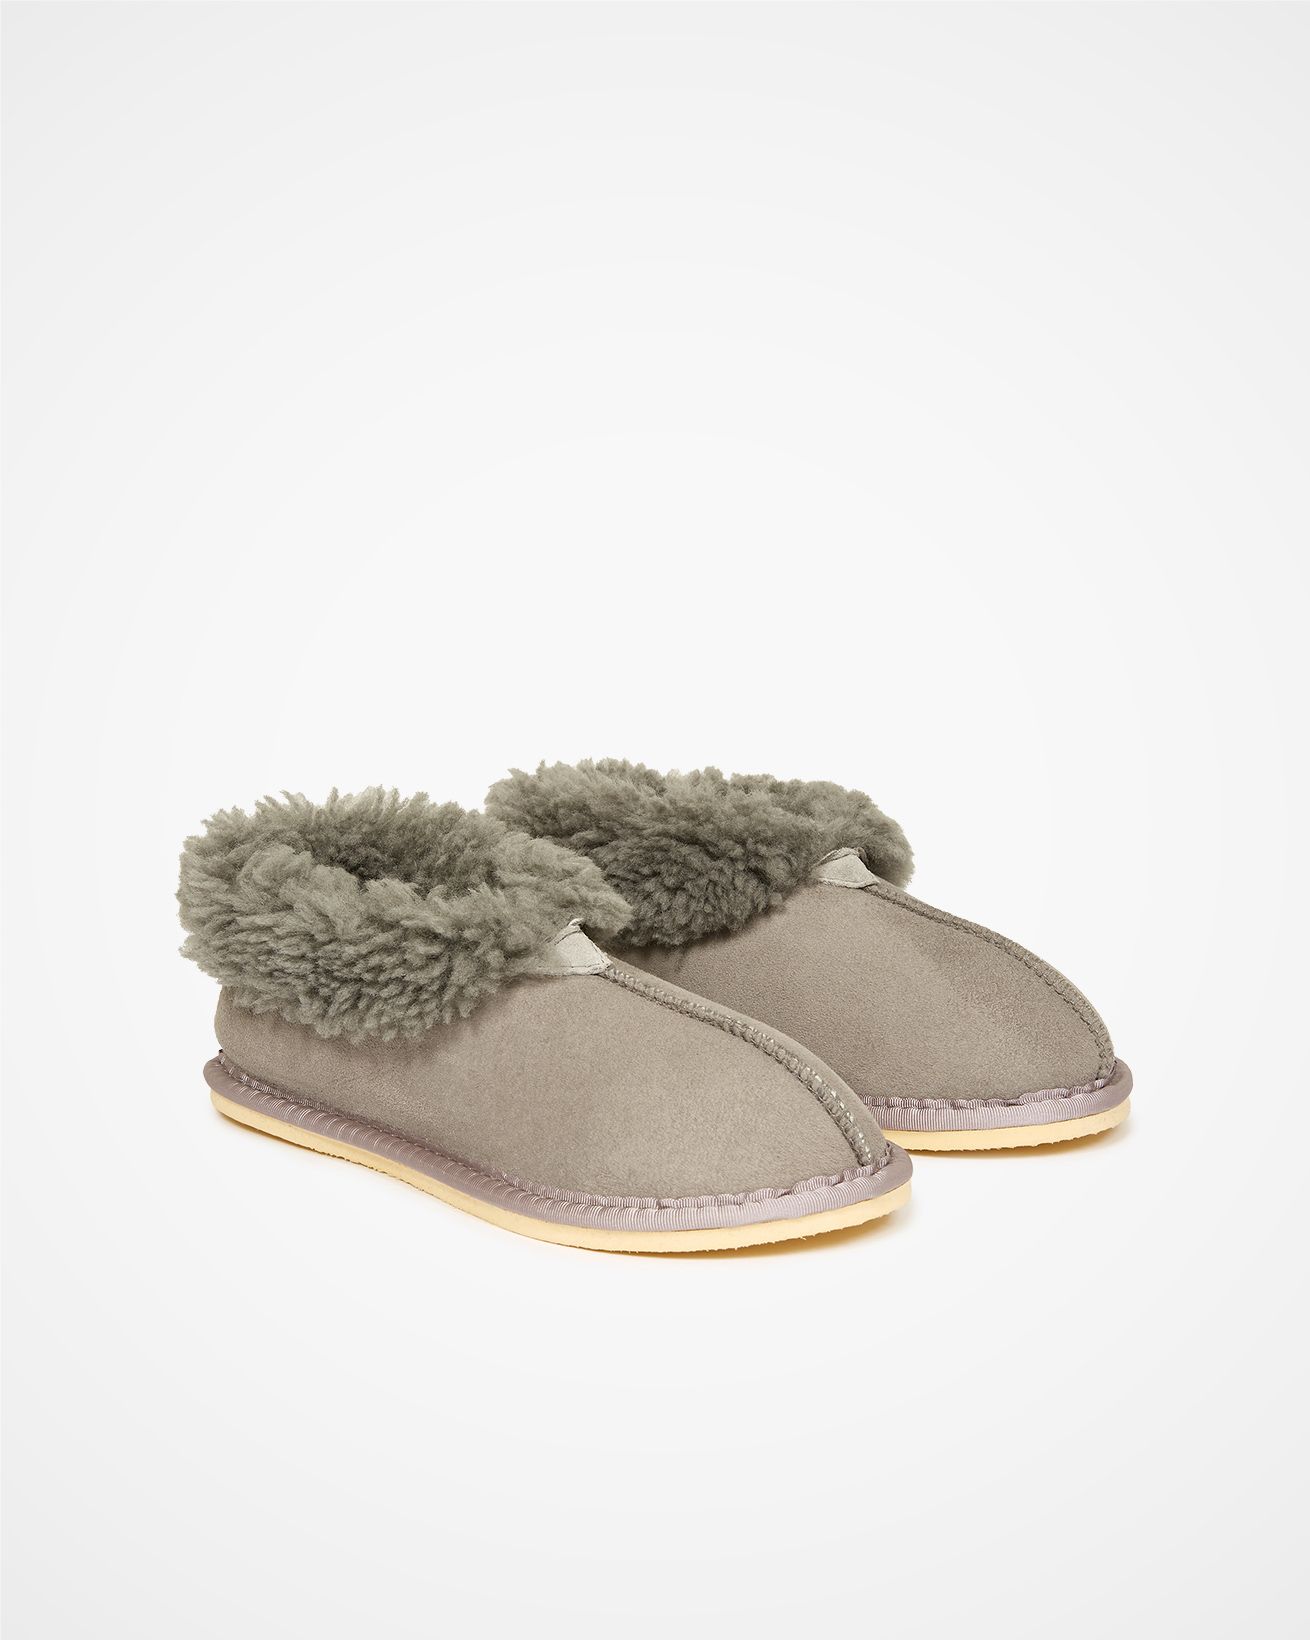 2100_ladies-sheepskin-bootee-slippers_light-grey_pair_web.jpg